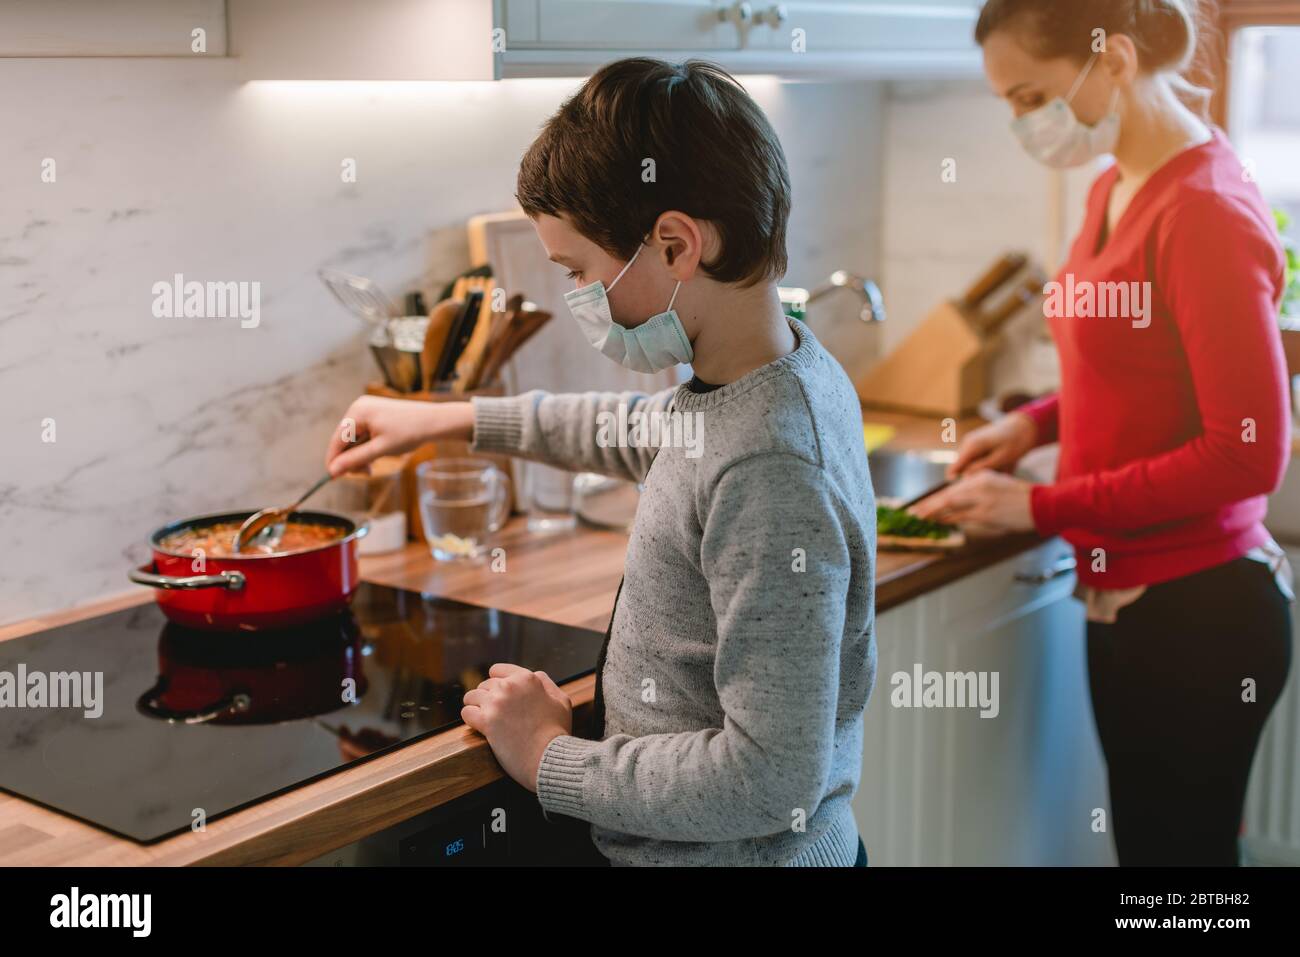 Family cooking at home during coronavirus crisis Stock Photo